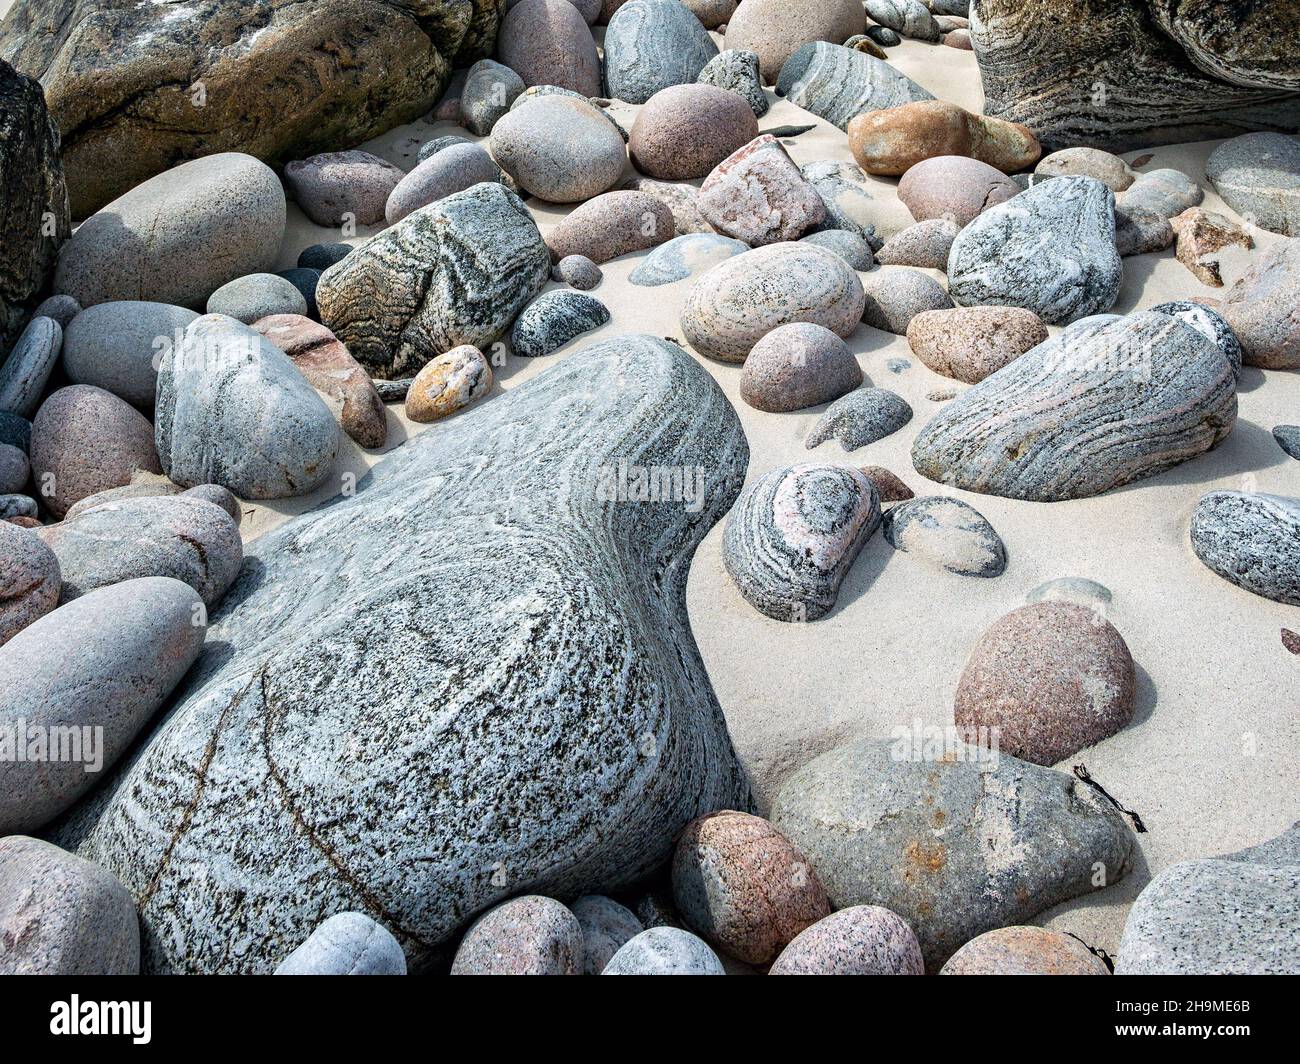 Banded rock, stones and pebbles, including Lewisian gneiss, on Hushinish Beach, Isle of Harris, Scotland, UK Stock Photo